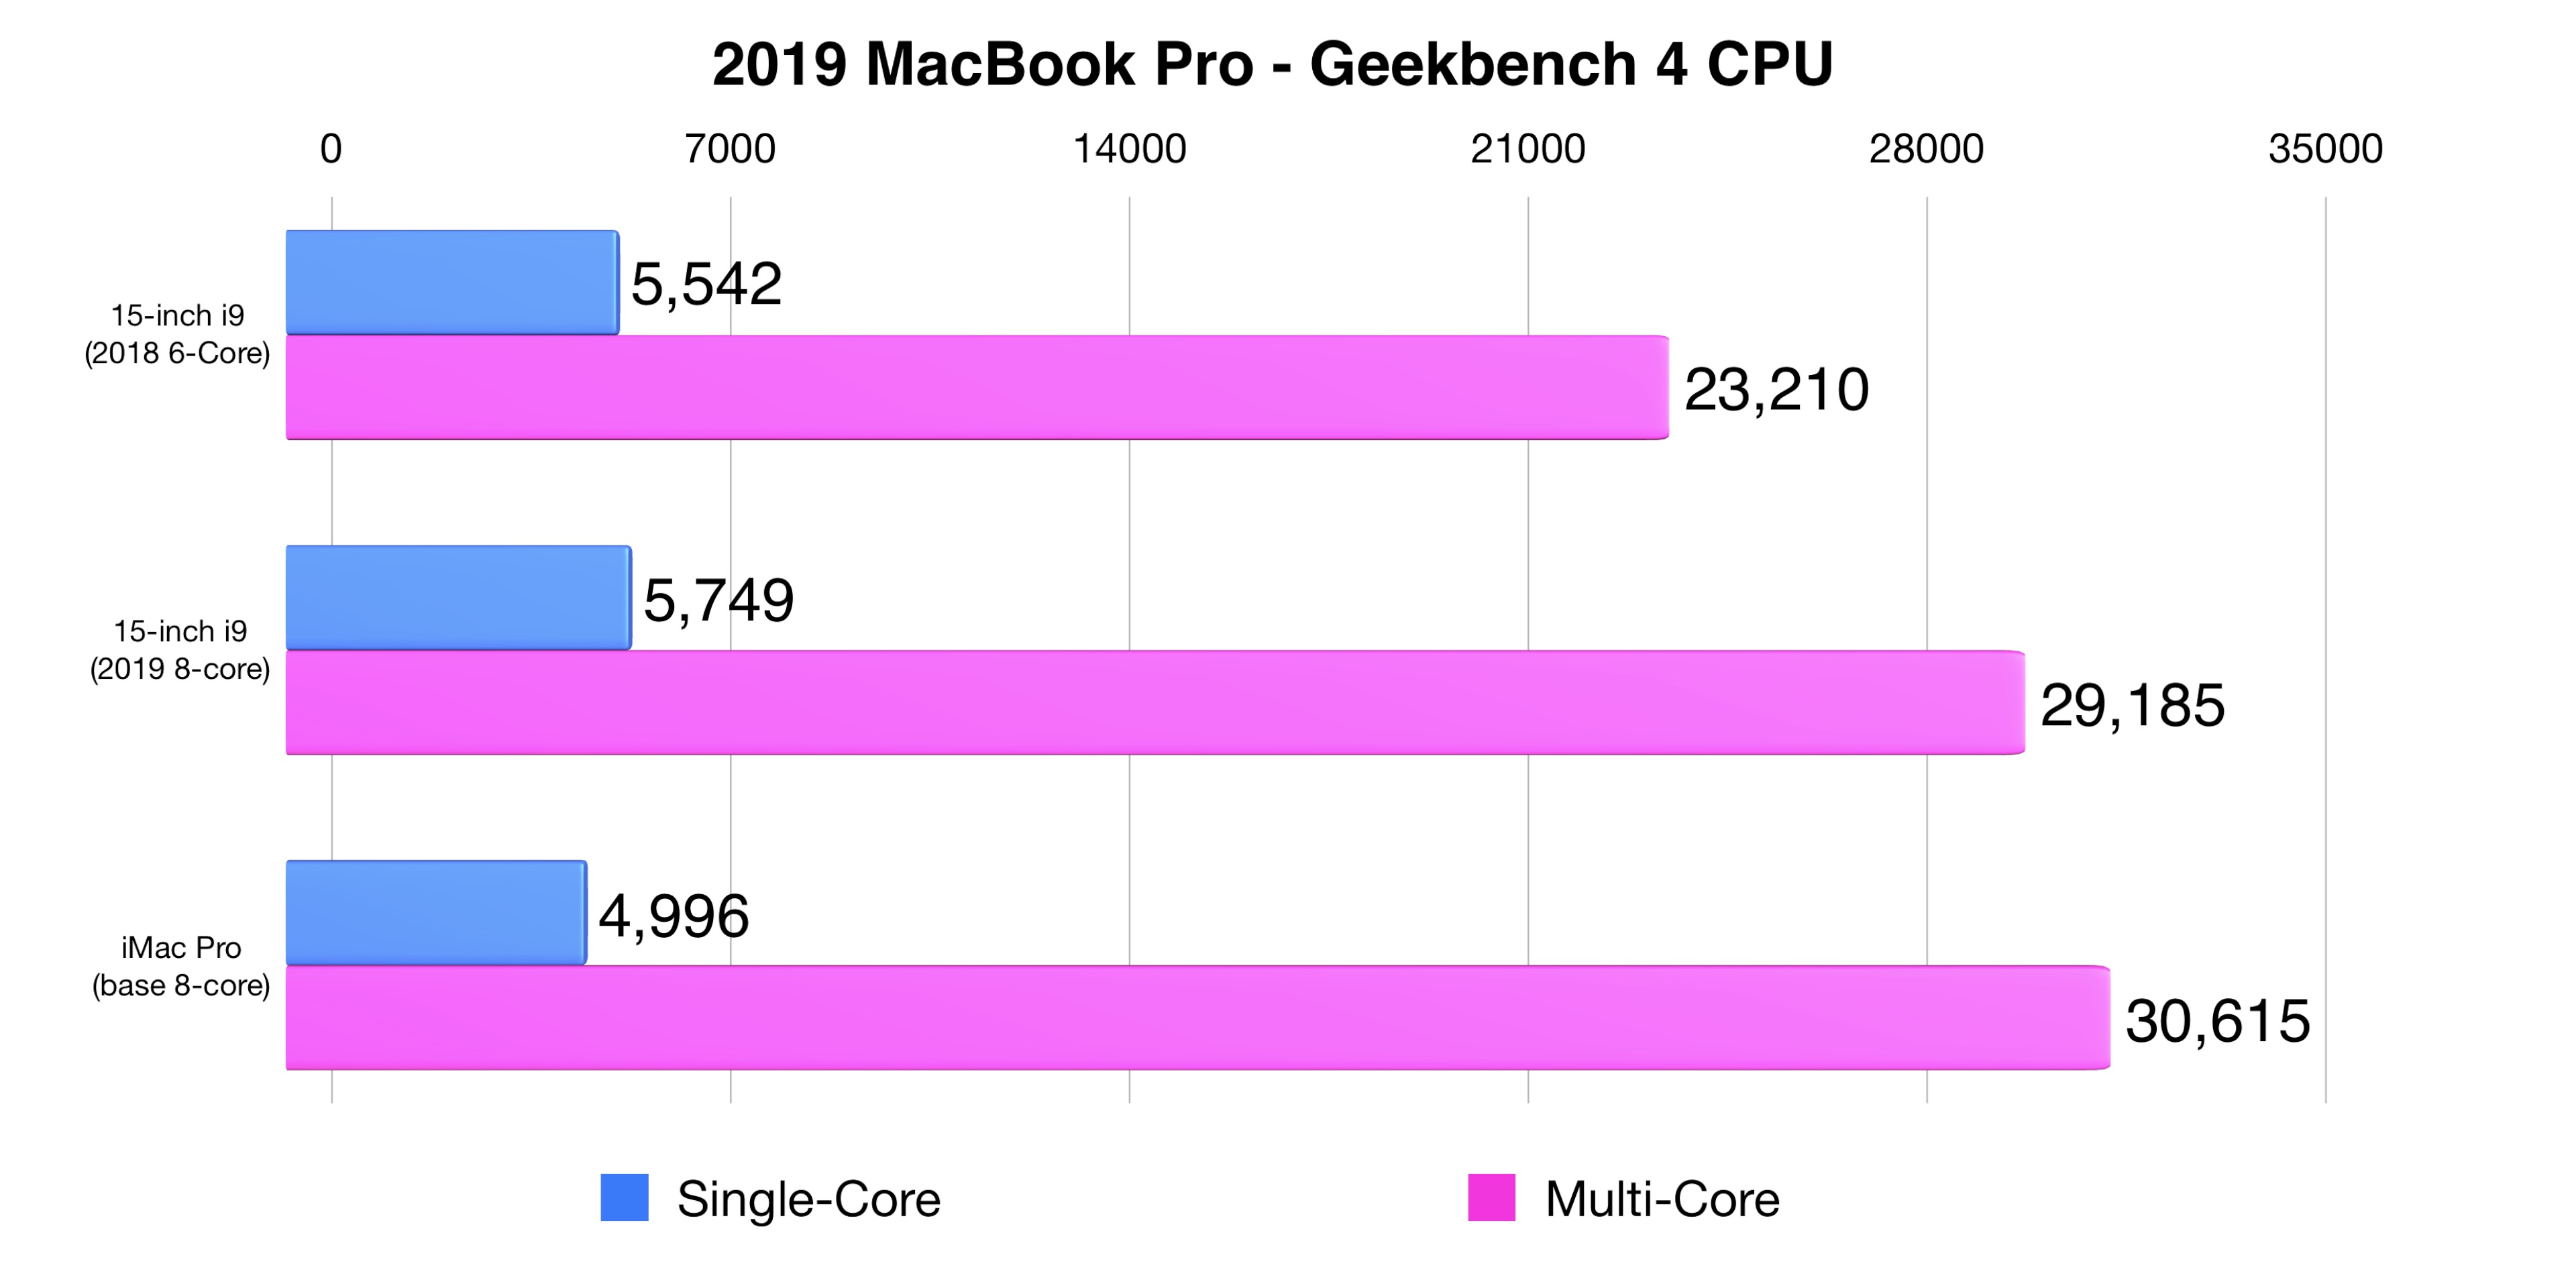 Slordig Gedetailleerd kleding Back to the Mac 014: MacBook Pro (2019) hands-on [Video] - 9to5Mac